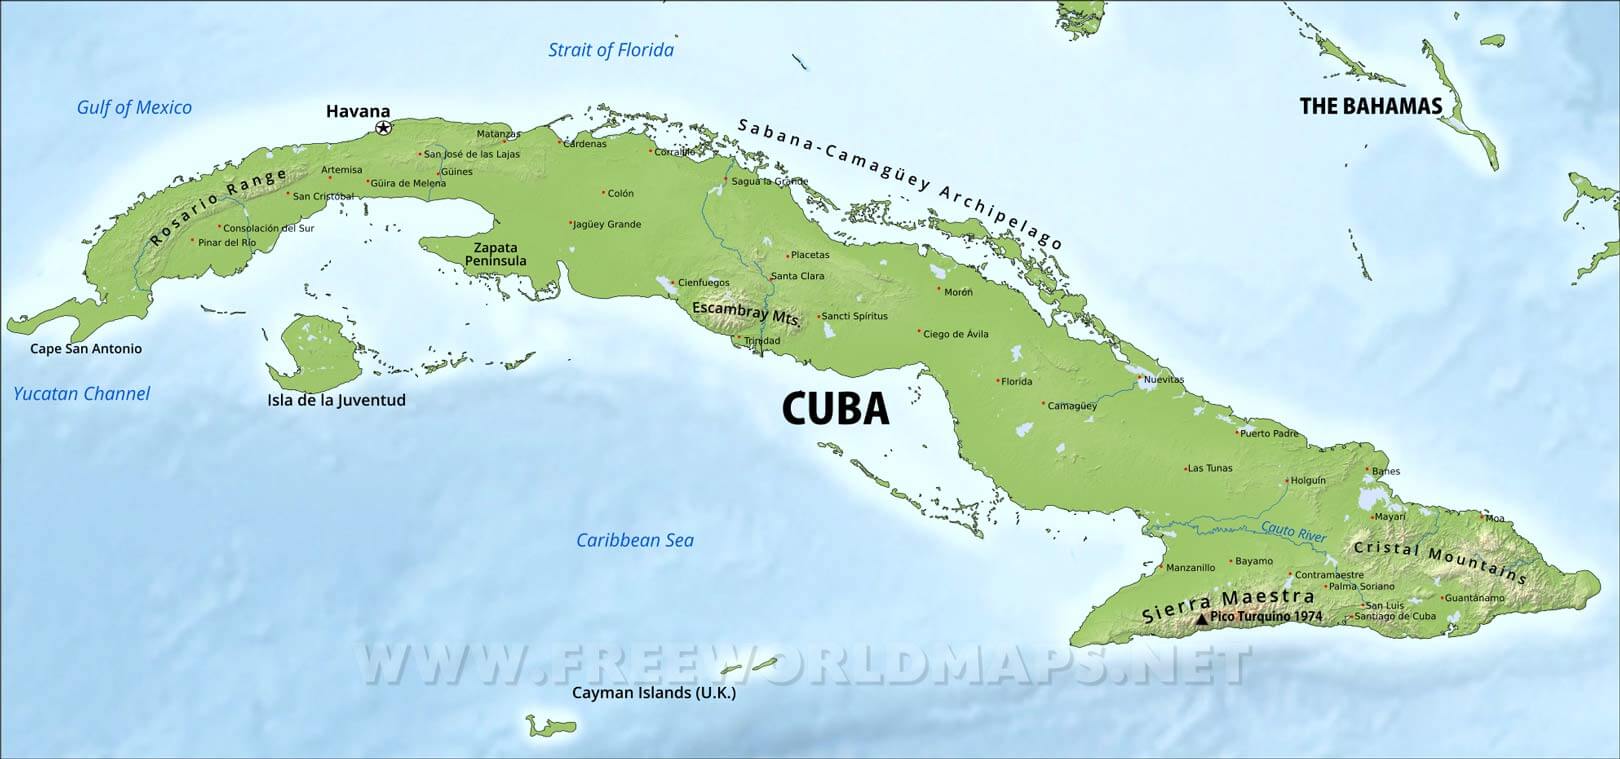 Cuba hopes for upward economic growth